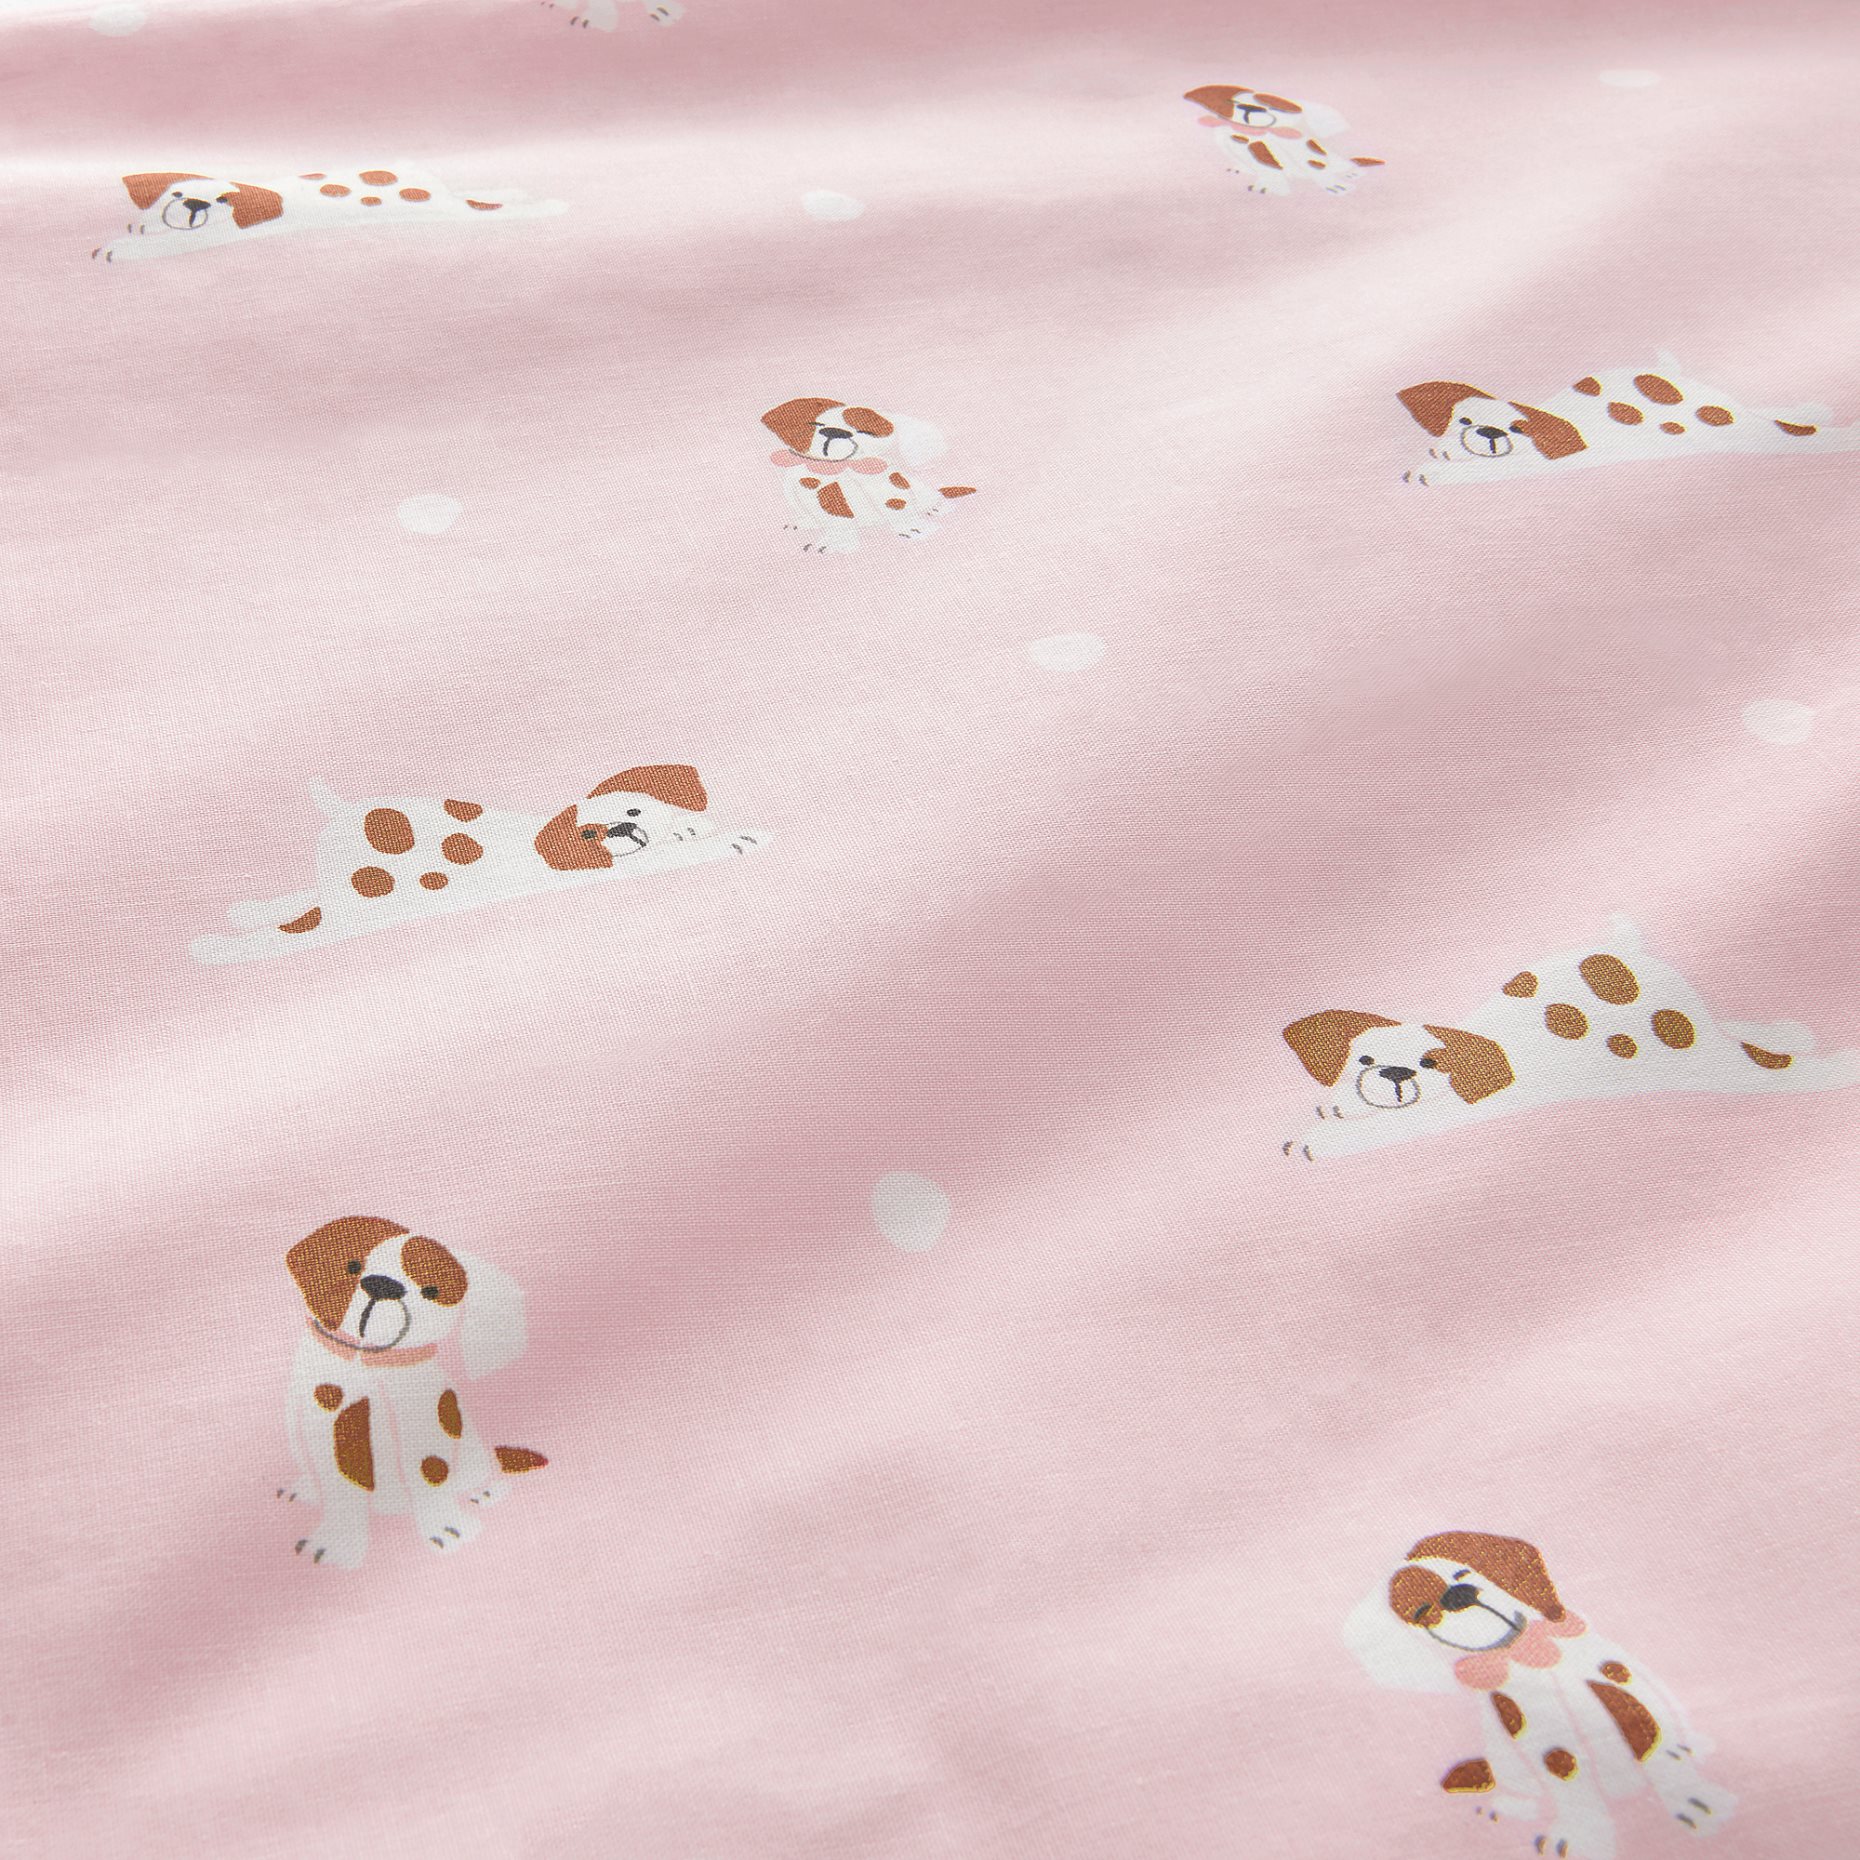 DRÖMSLOTT, duvet cover 1 pillowcase for cot/puppy pattern, 110x125/35x55 cm, 905.211.90